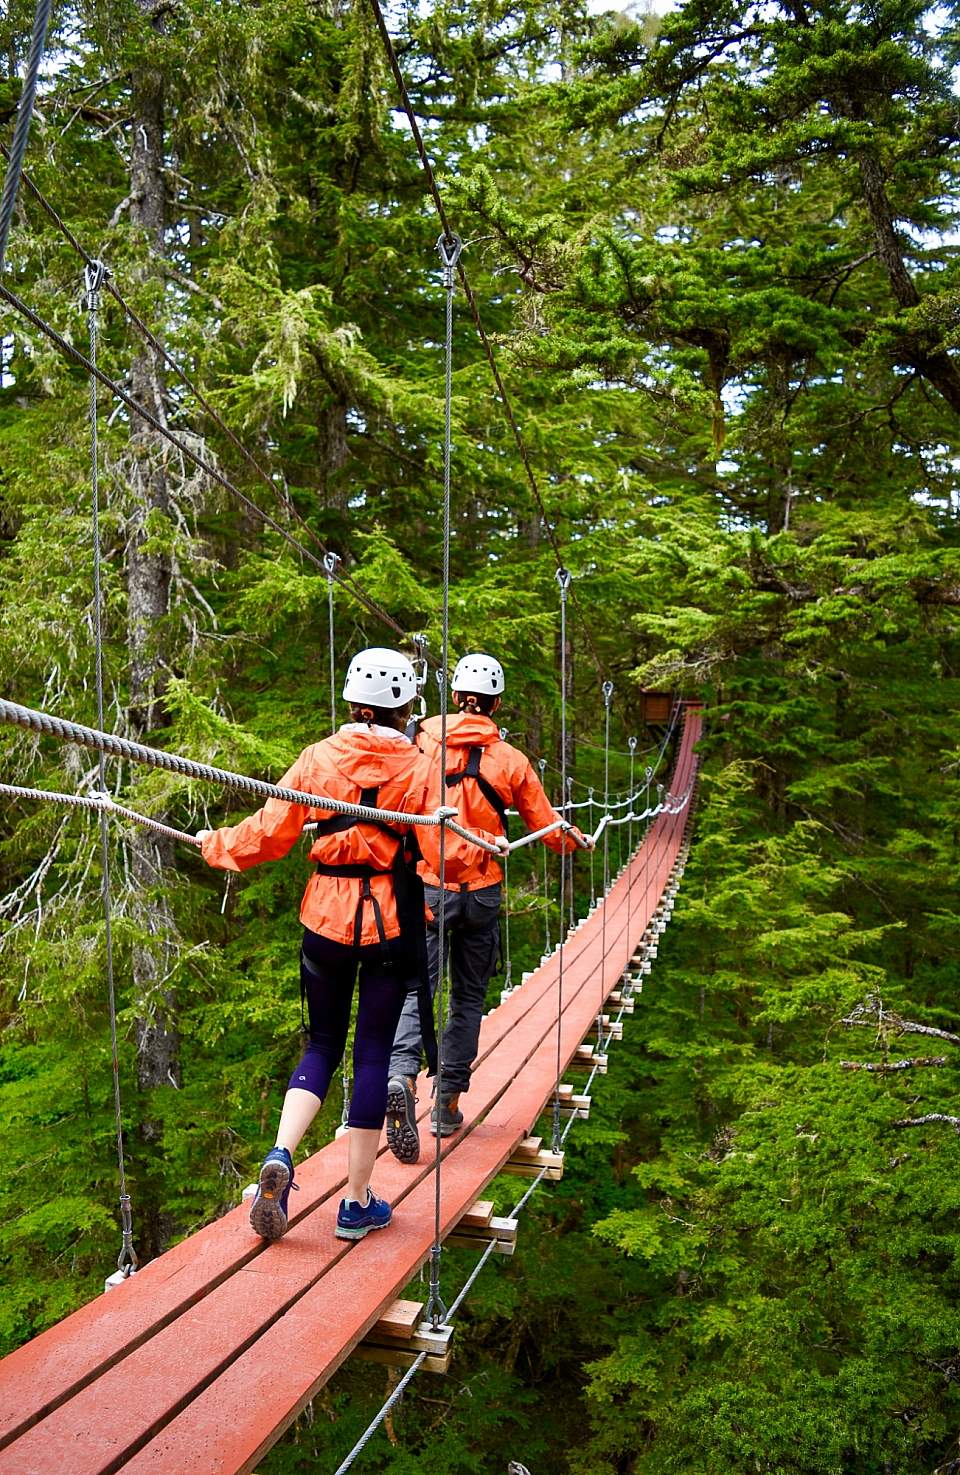 Two people in ziplining gear walk across a suspension bridge through the forest.